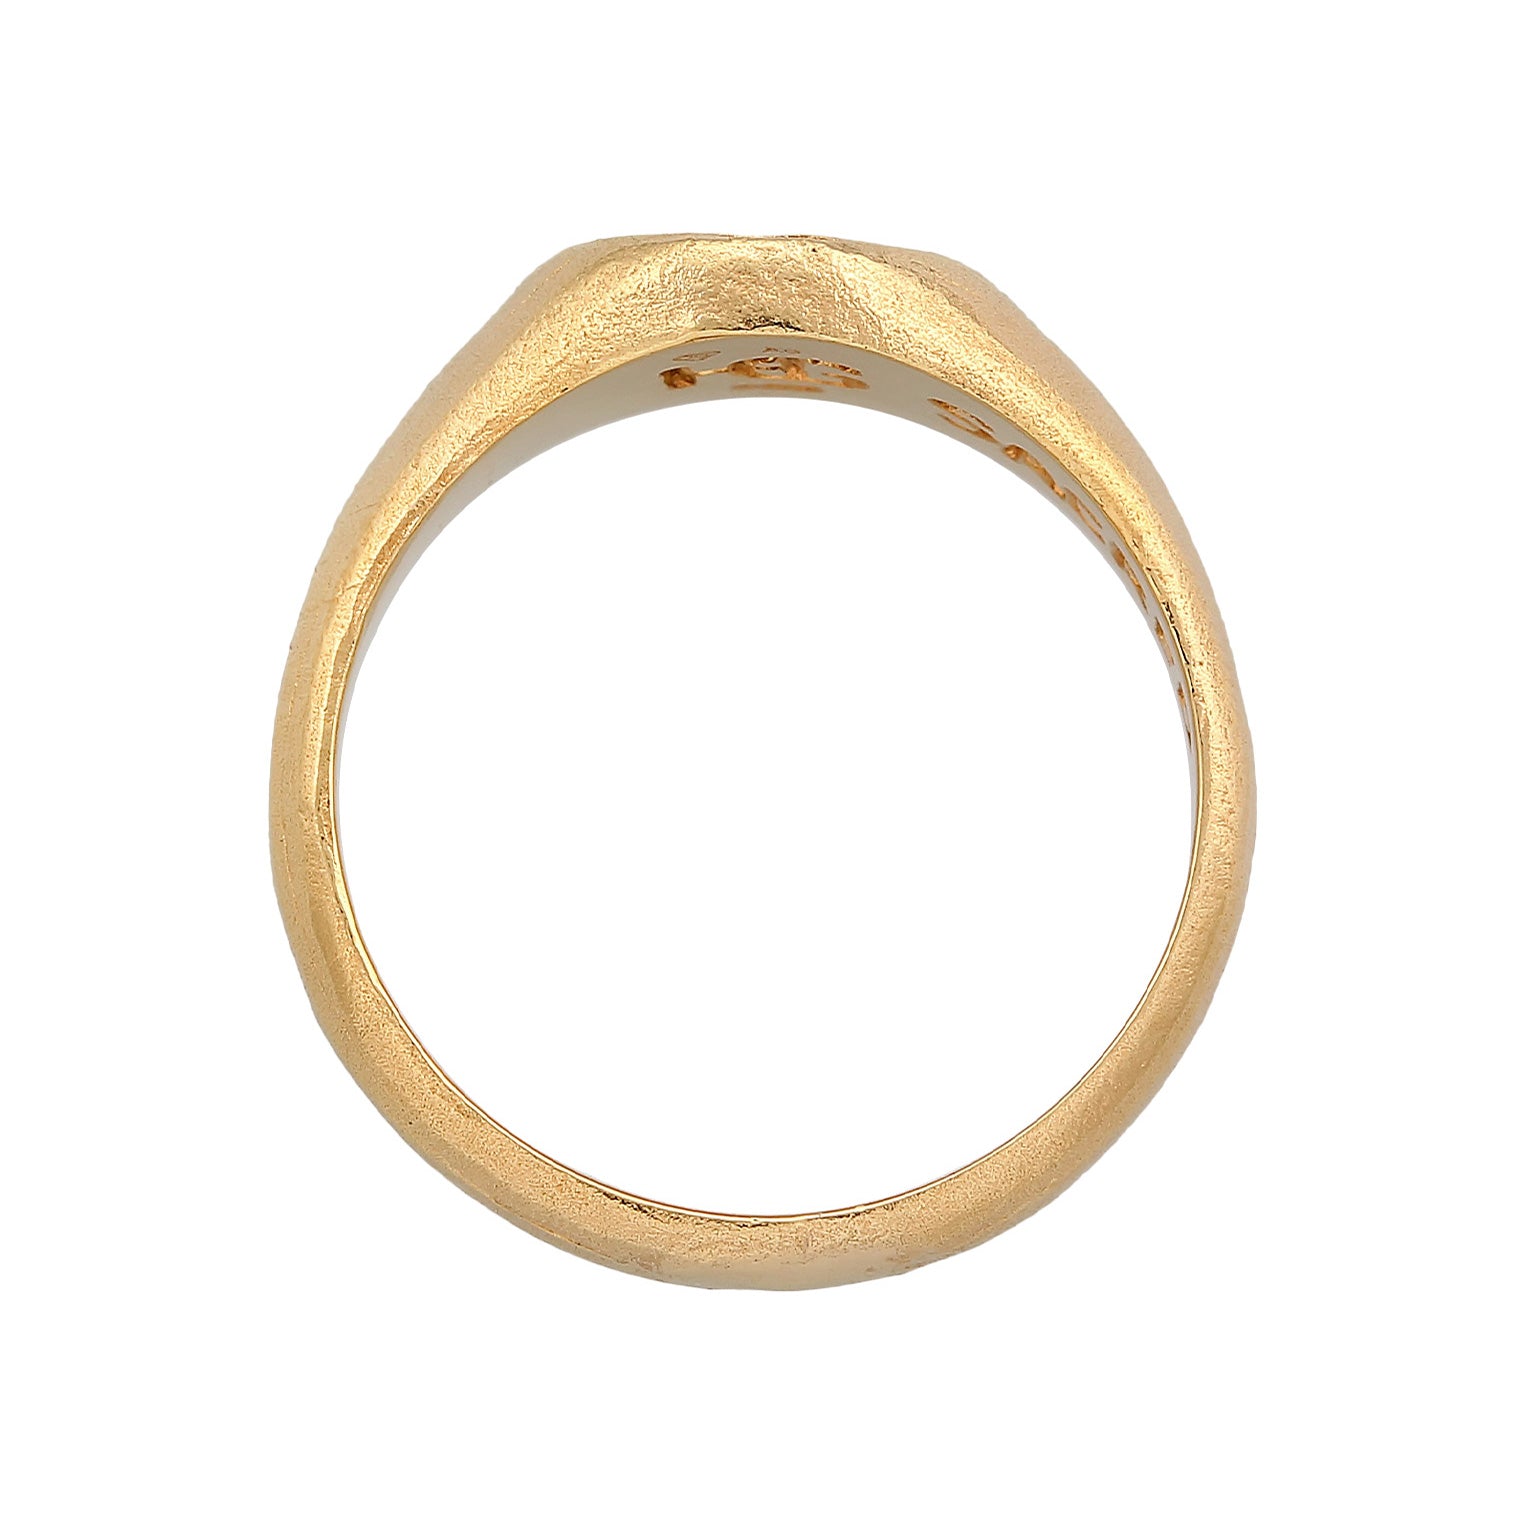 Gold - HAZE & GLORY | The Sacred Sun Ring, gold